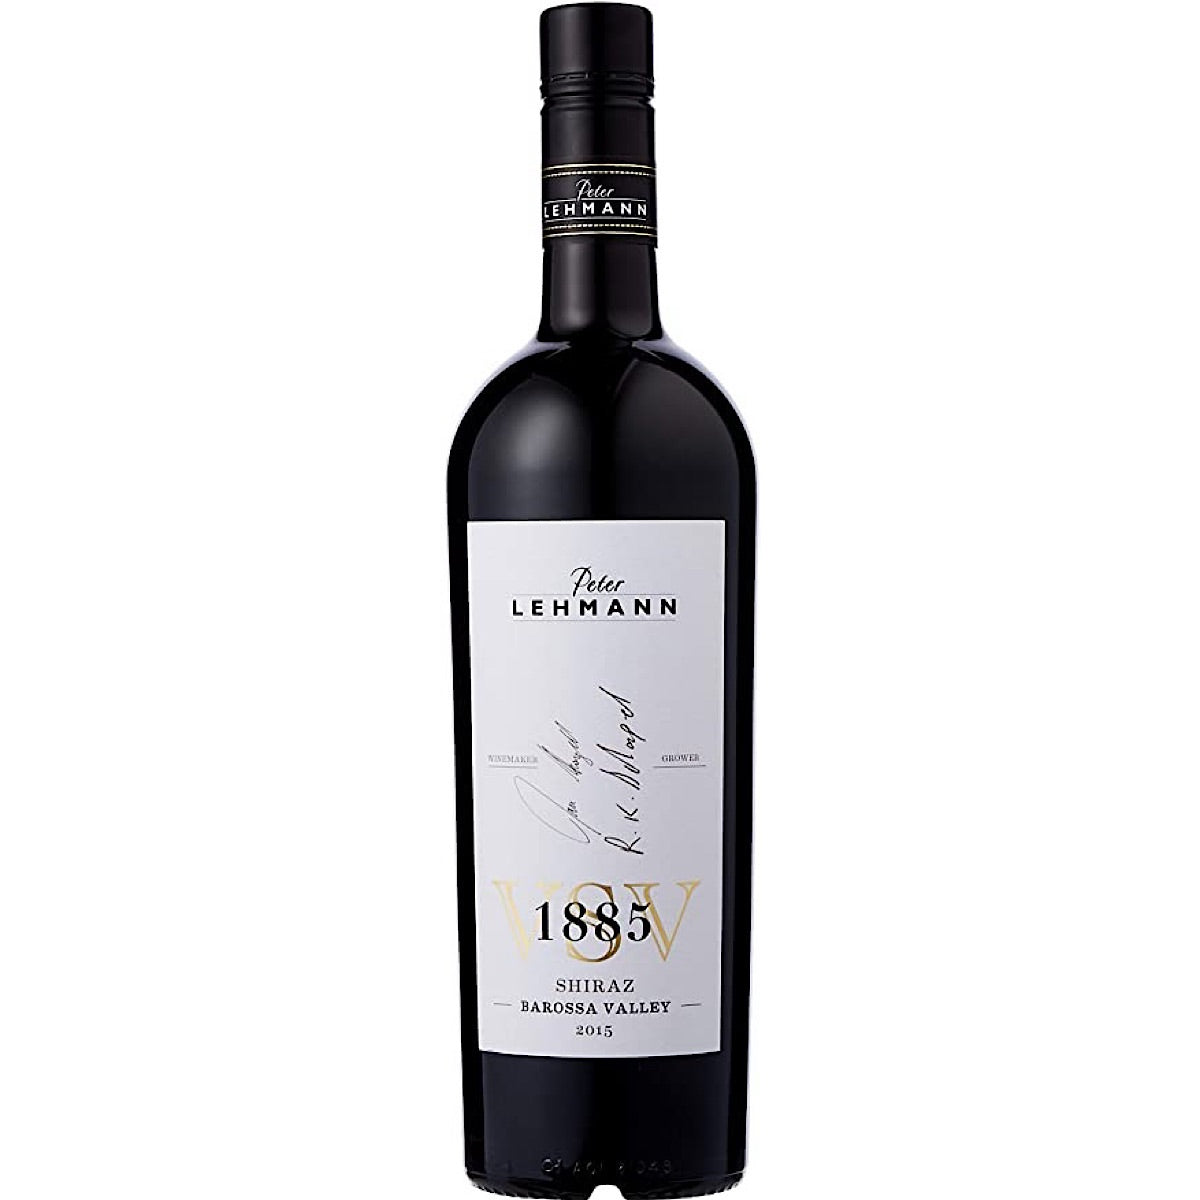 Peter Lehmann Very Special Vineyard `1885` Barossa Valley Shiraz 6 bottle Case 75cl.